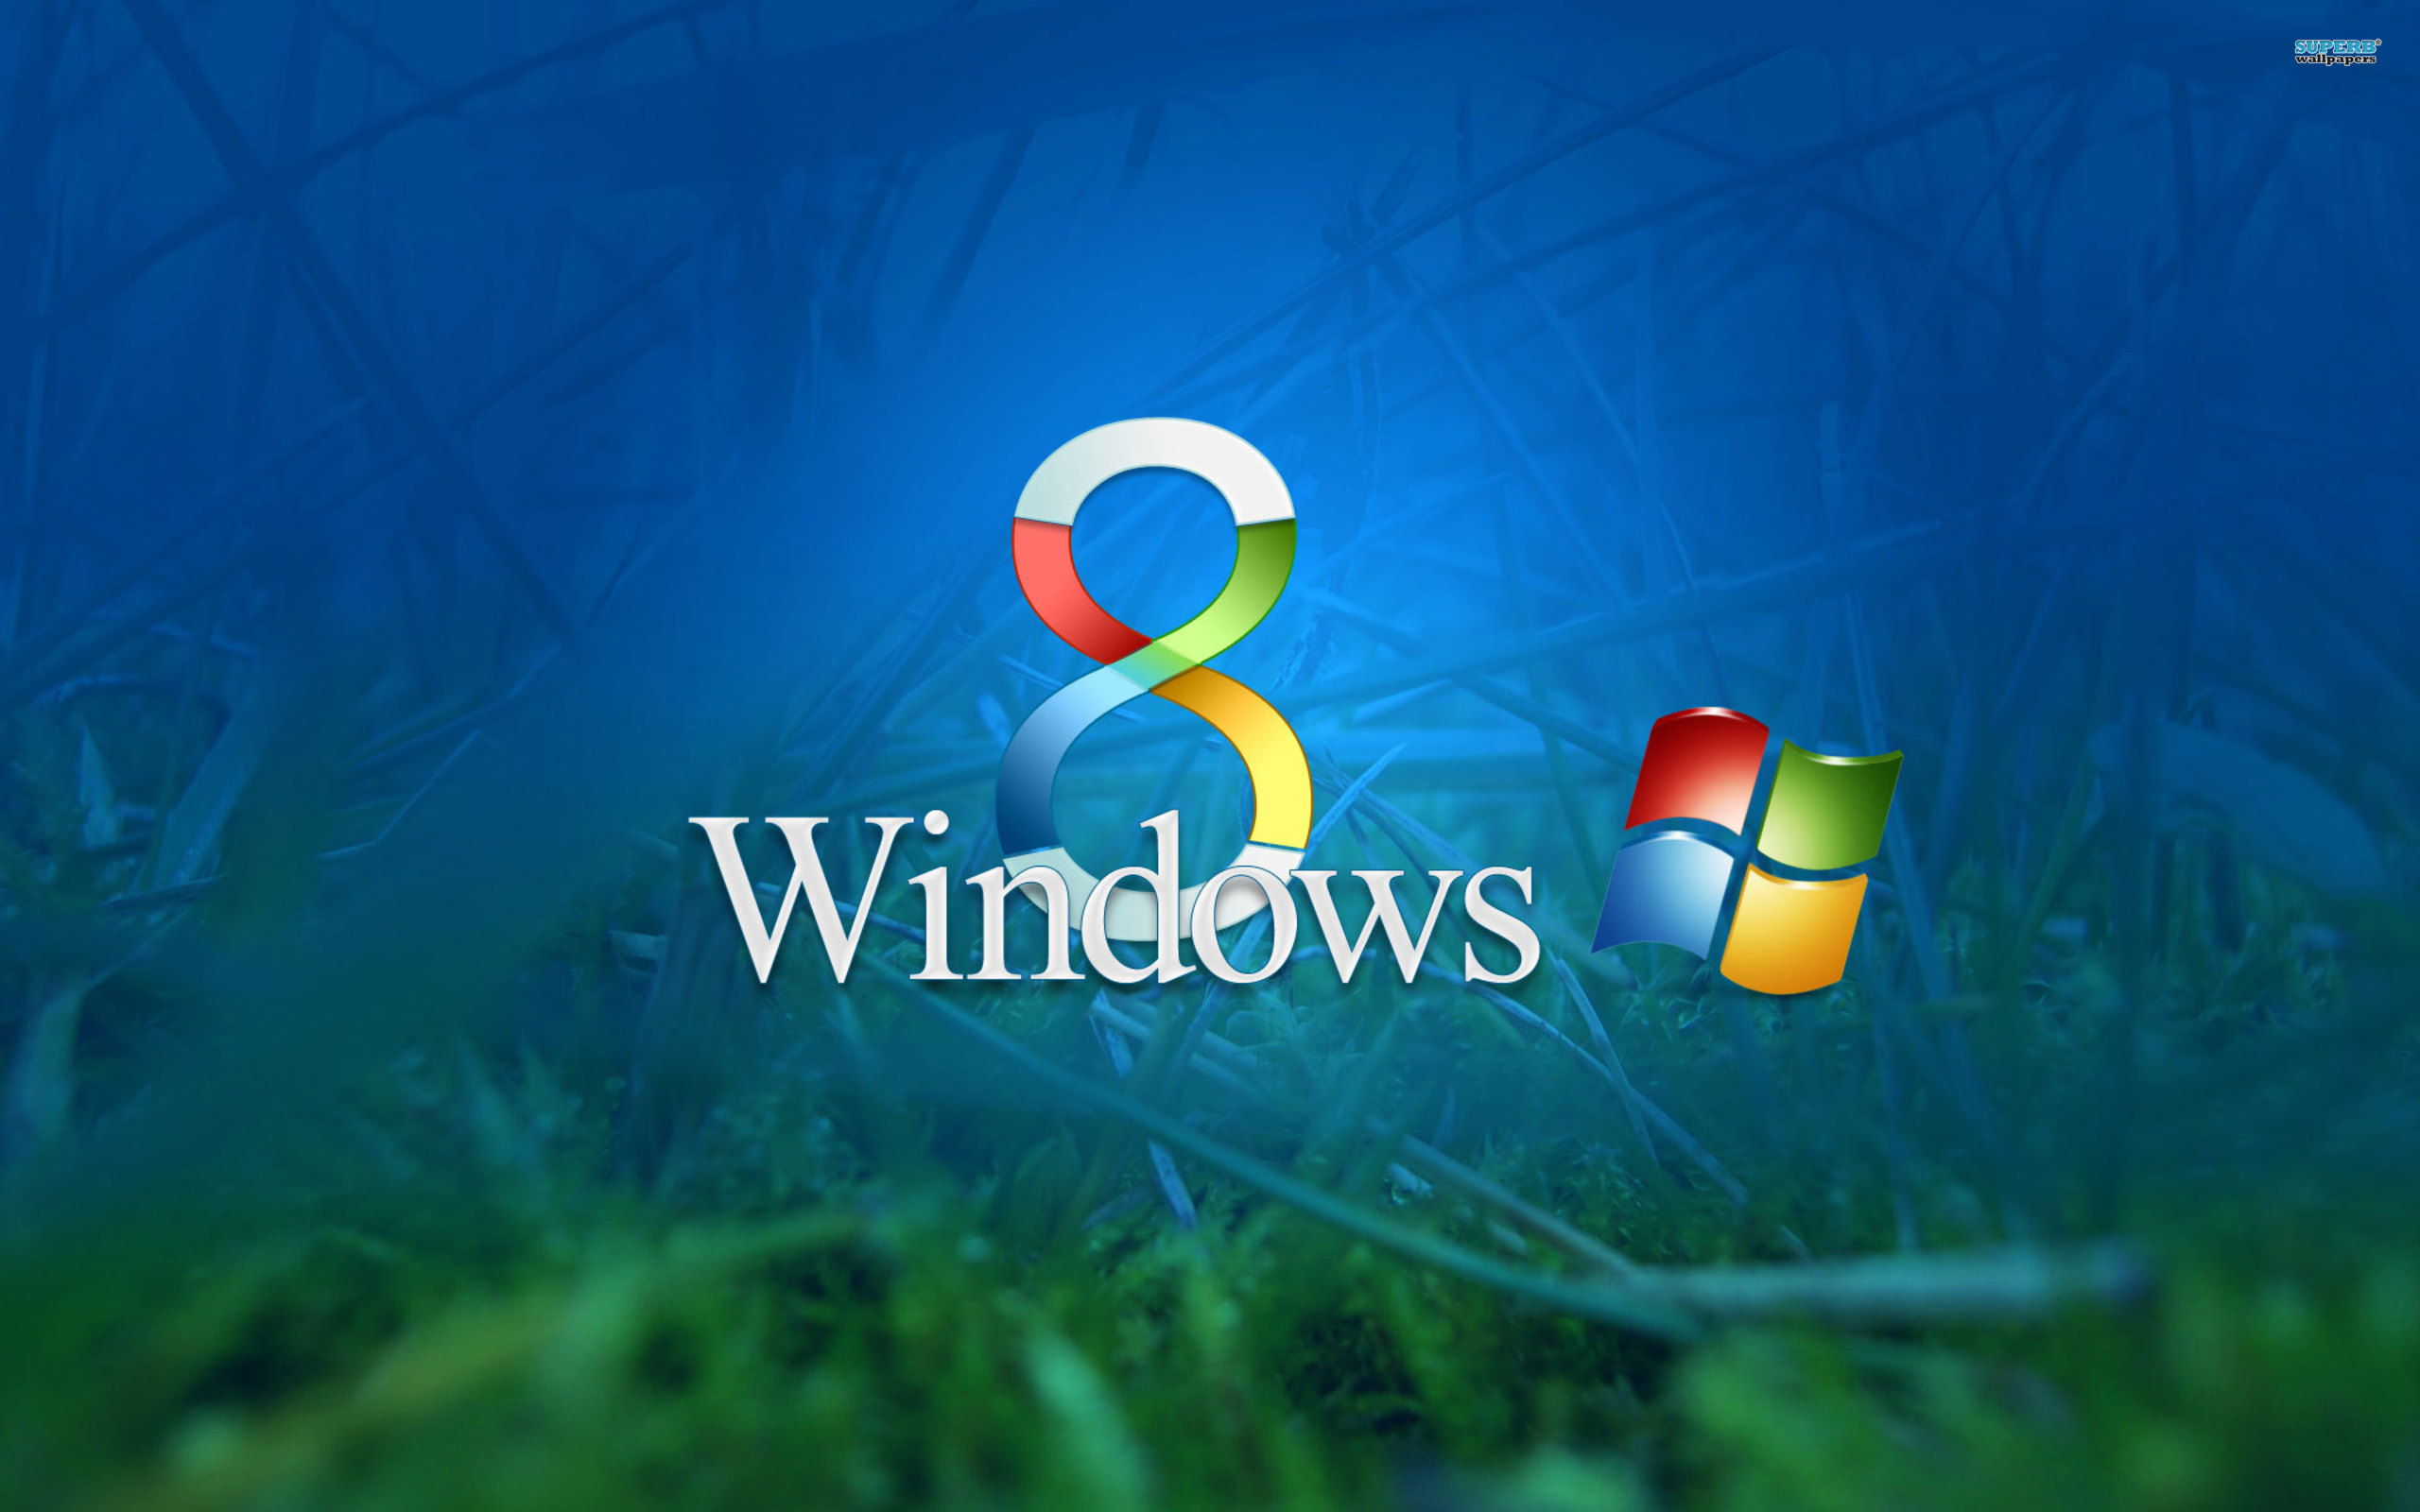 windows, windows 8, technology, microsoft Full HD